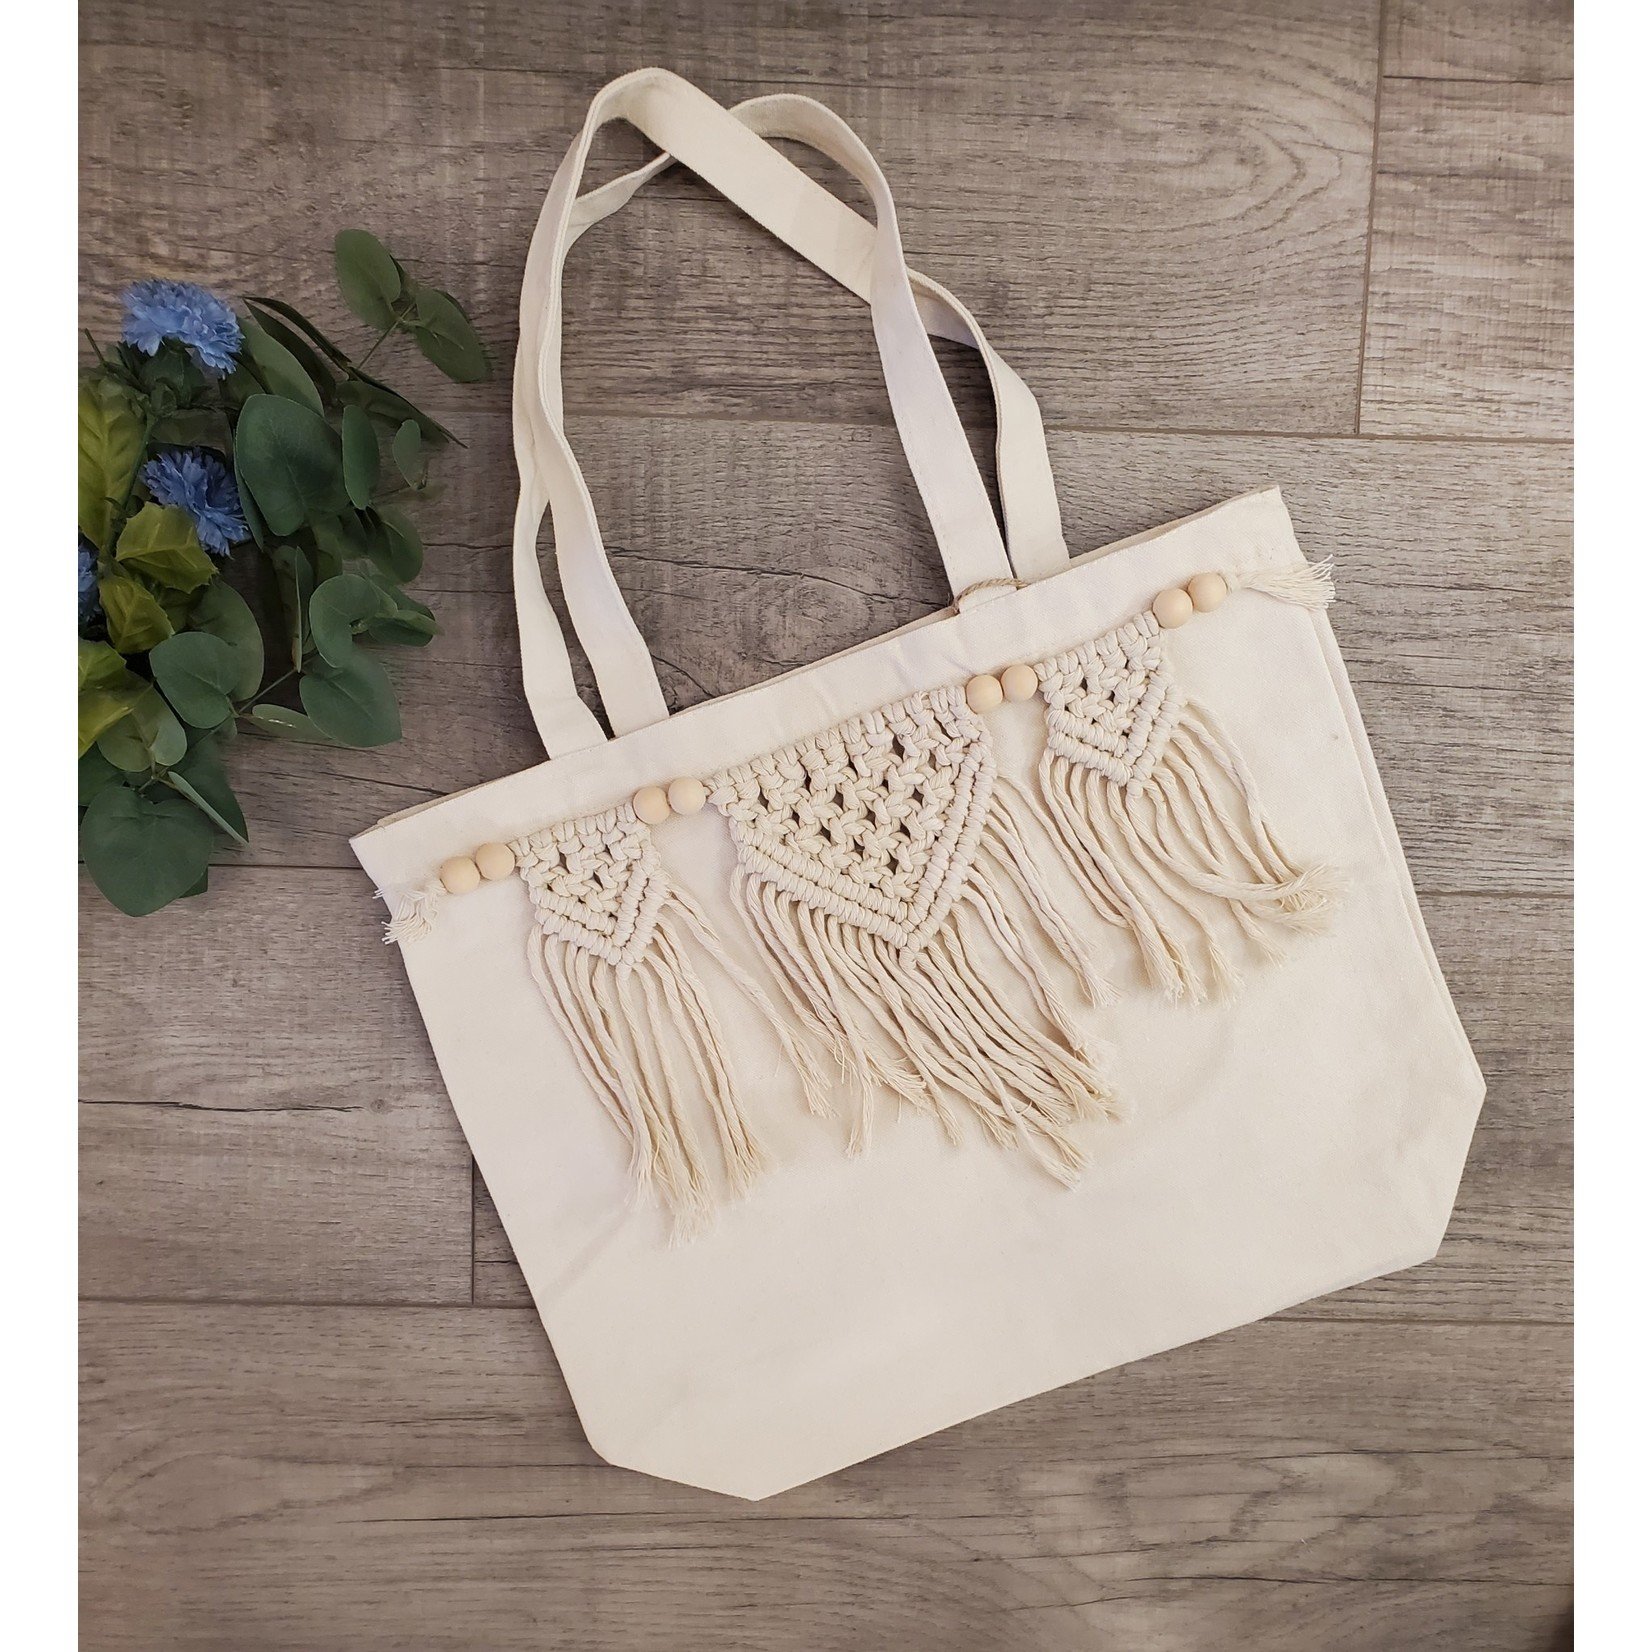 Amazon.com: Handmade Macrame Shoulder Bag - Macrame Purse with Fringe -  Boho Macrame Bag -%100 Cotton Rope - Cross Body Bag With Strap : Handmade  Products